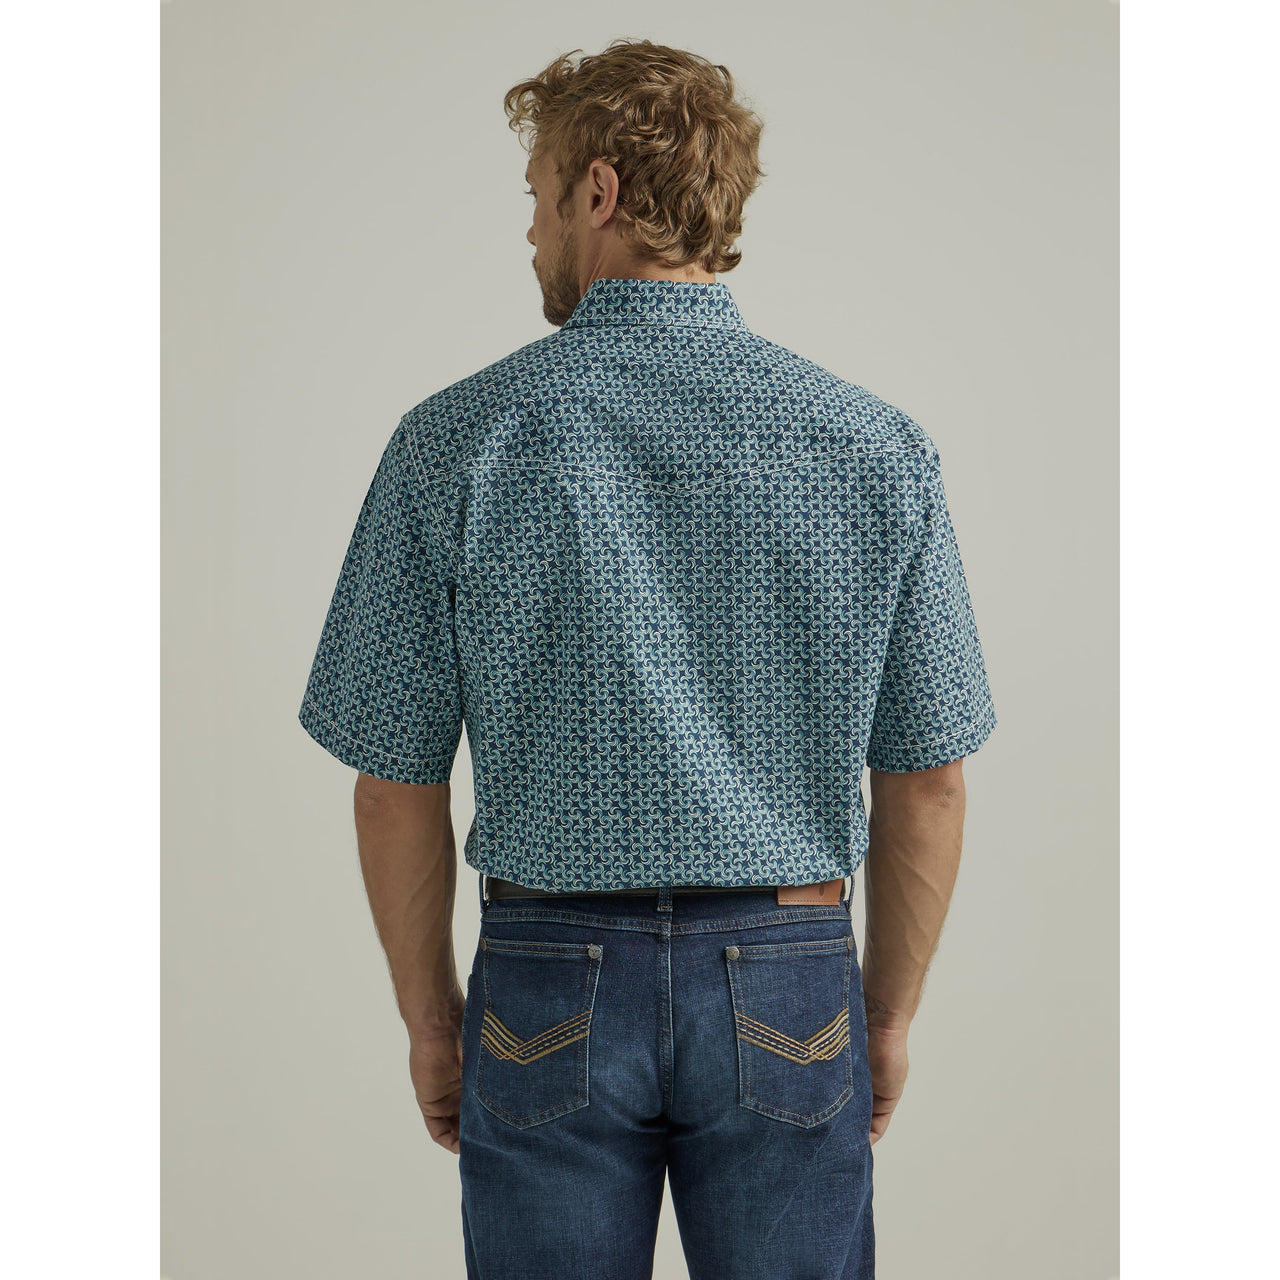 Wrangler Men's 20X Advanced Comfort Short Sleeve Shirt - Blue